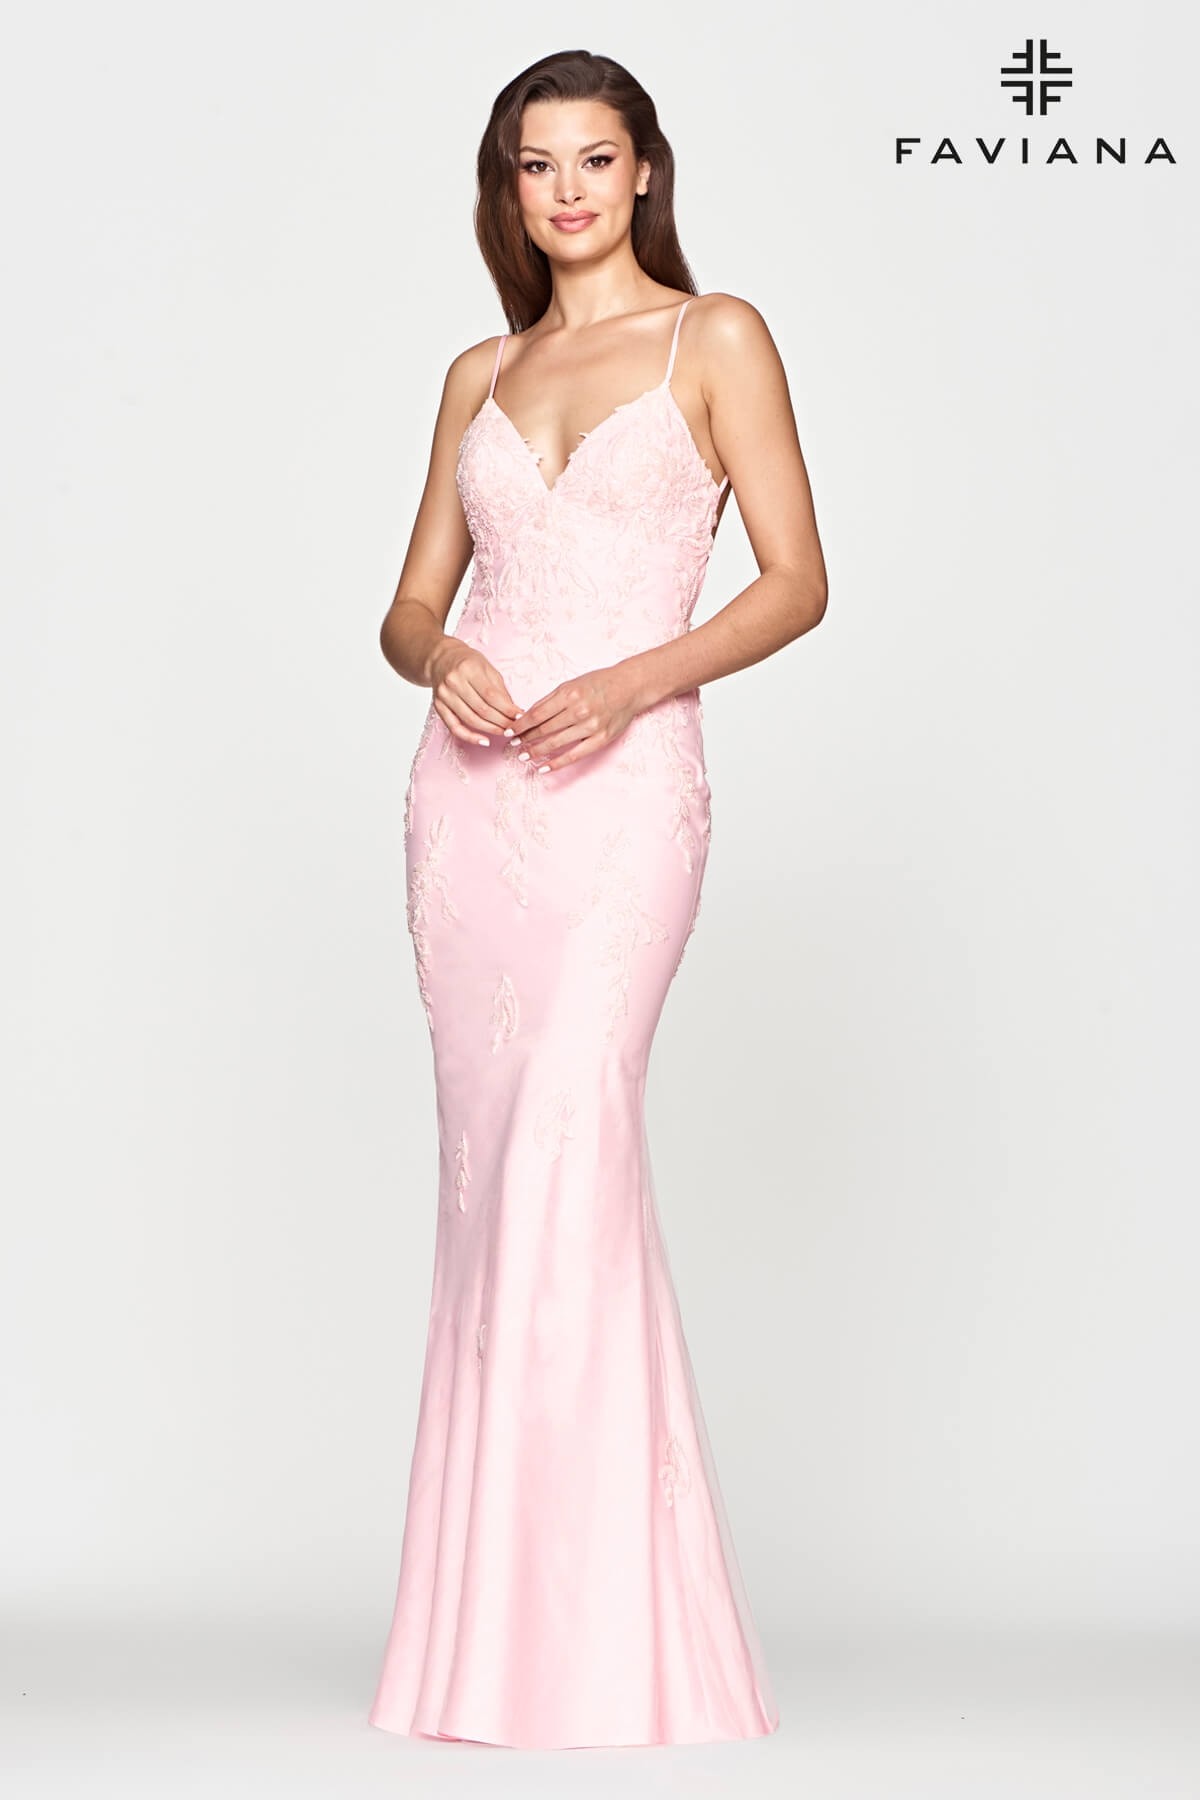 Faviana S10633 Prom Dress